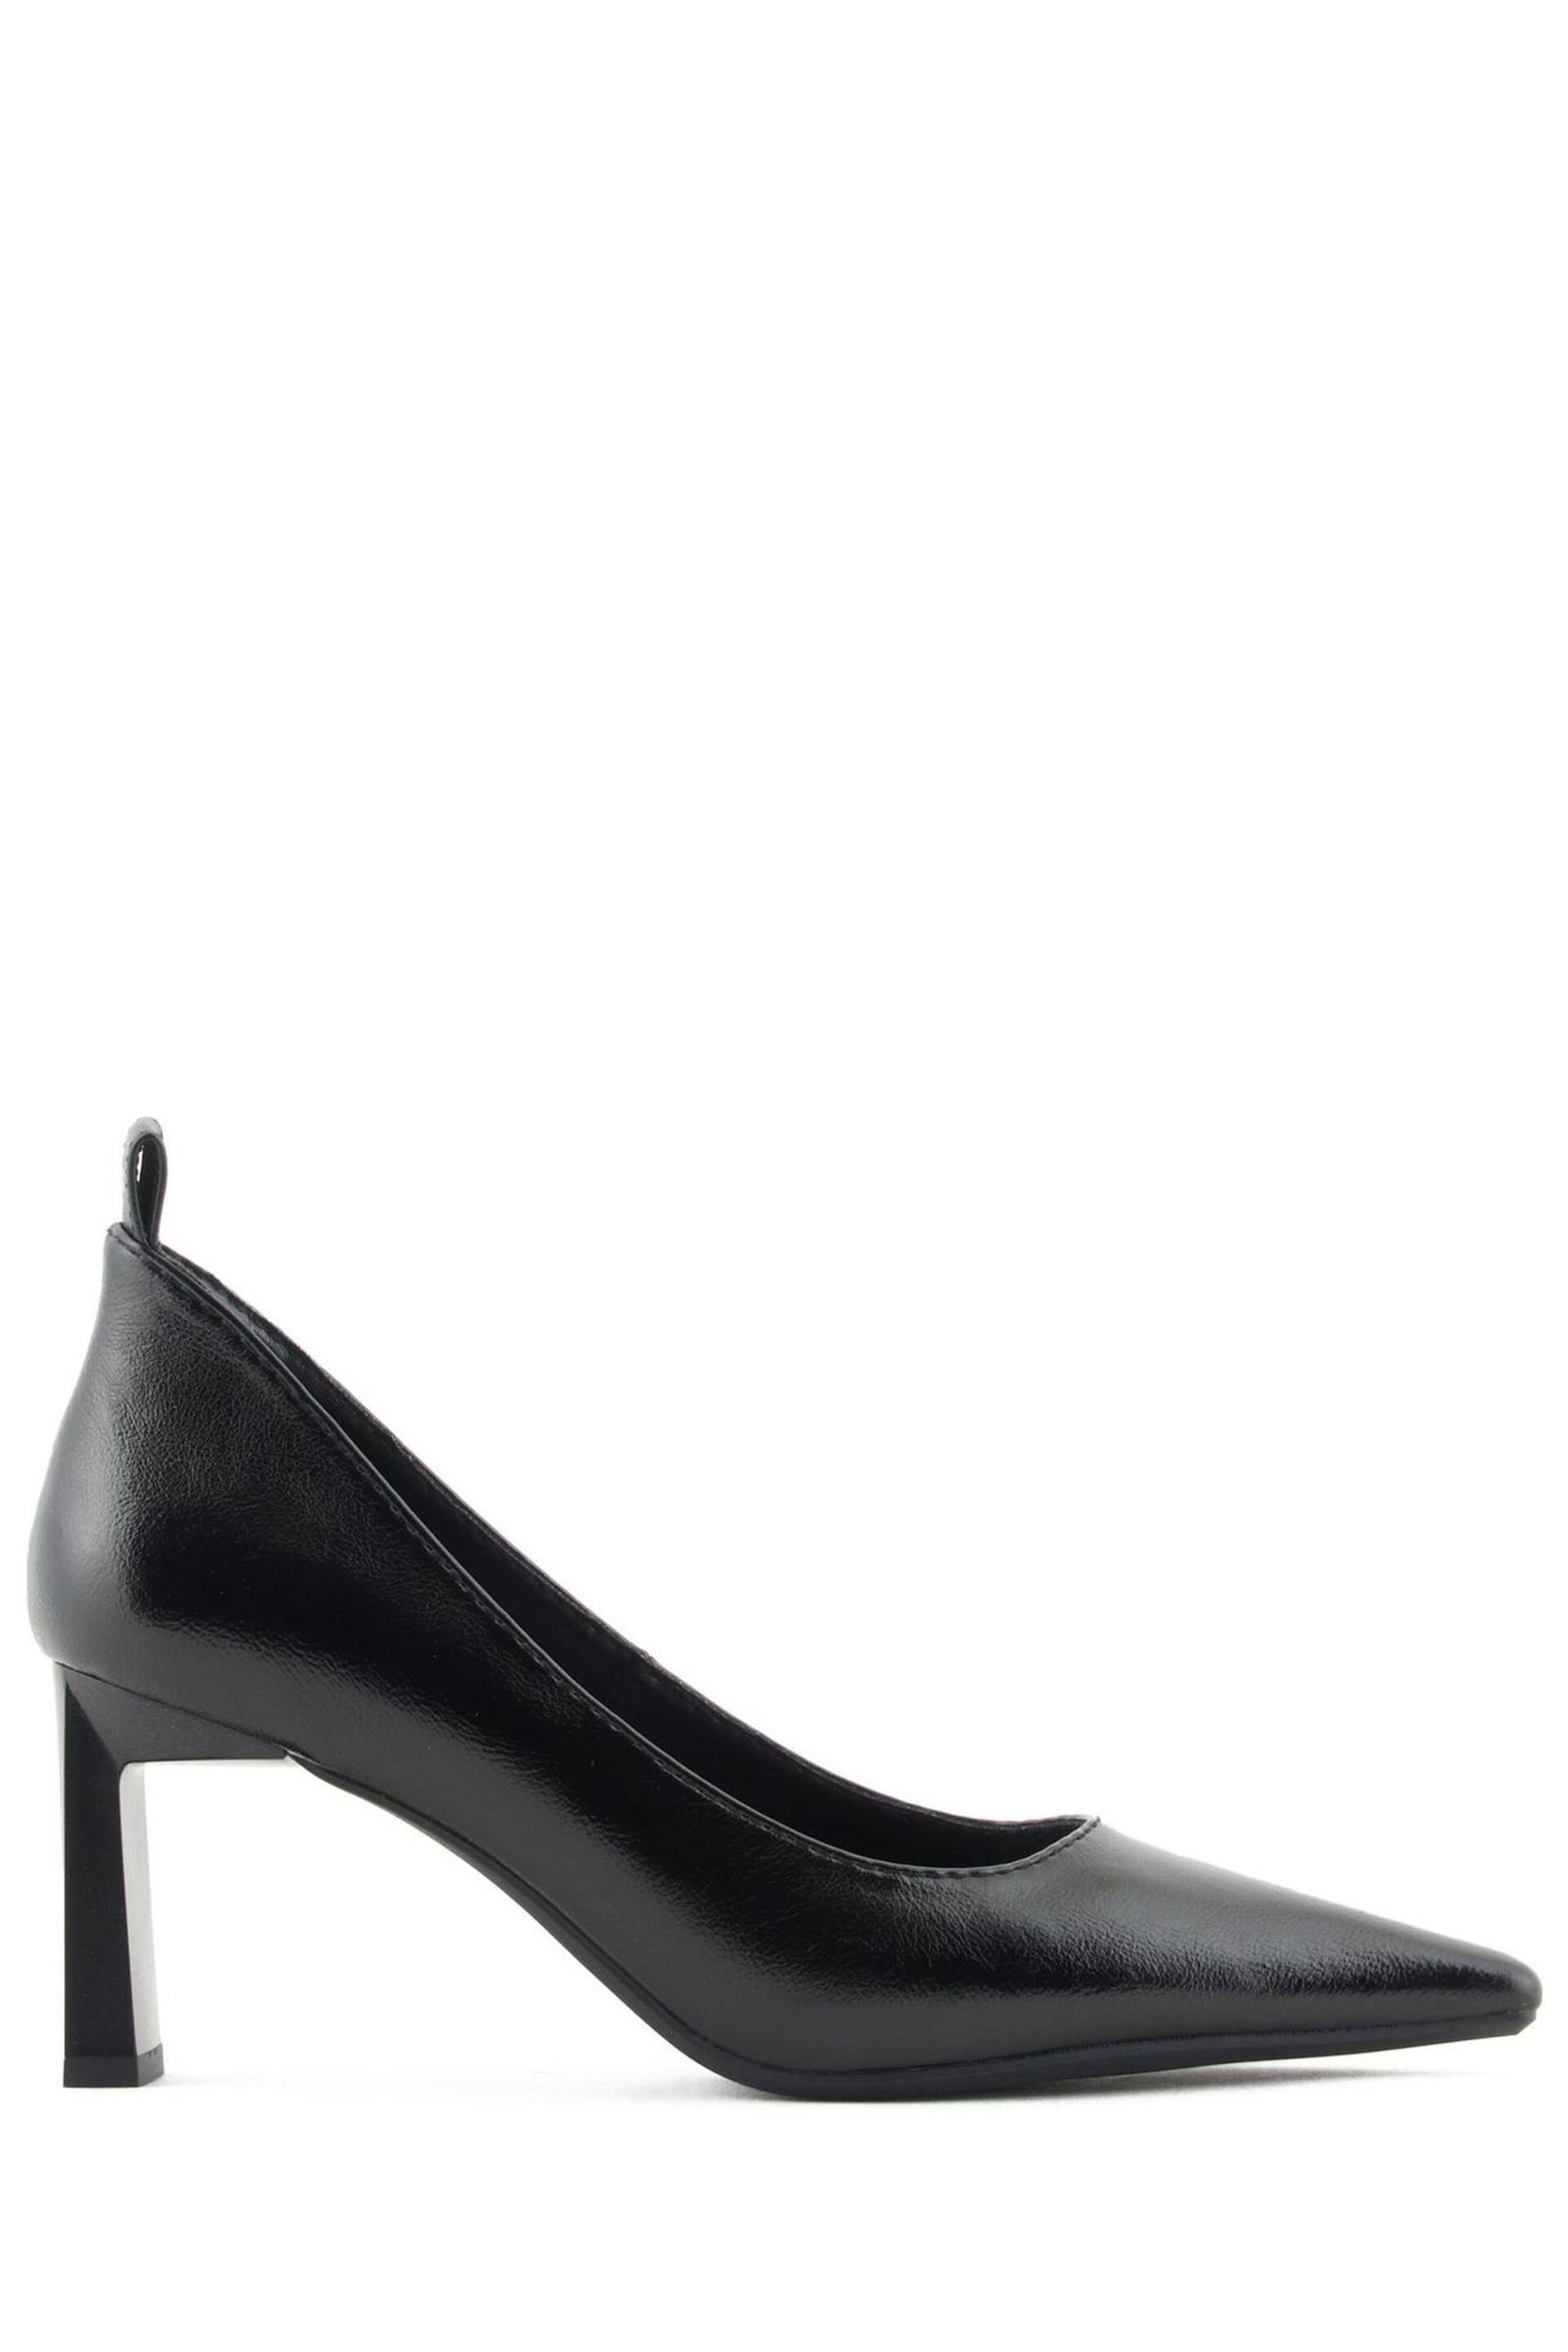 Armani Exchange Stiletto Black Shoes - Image 1 of 4